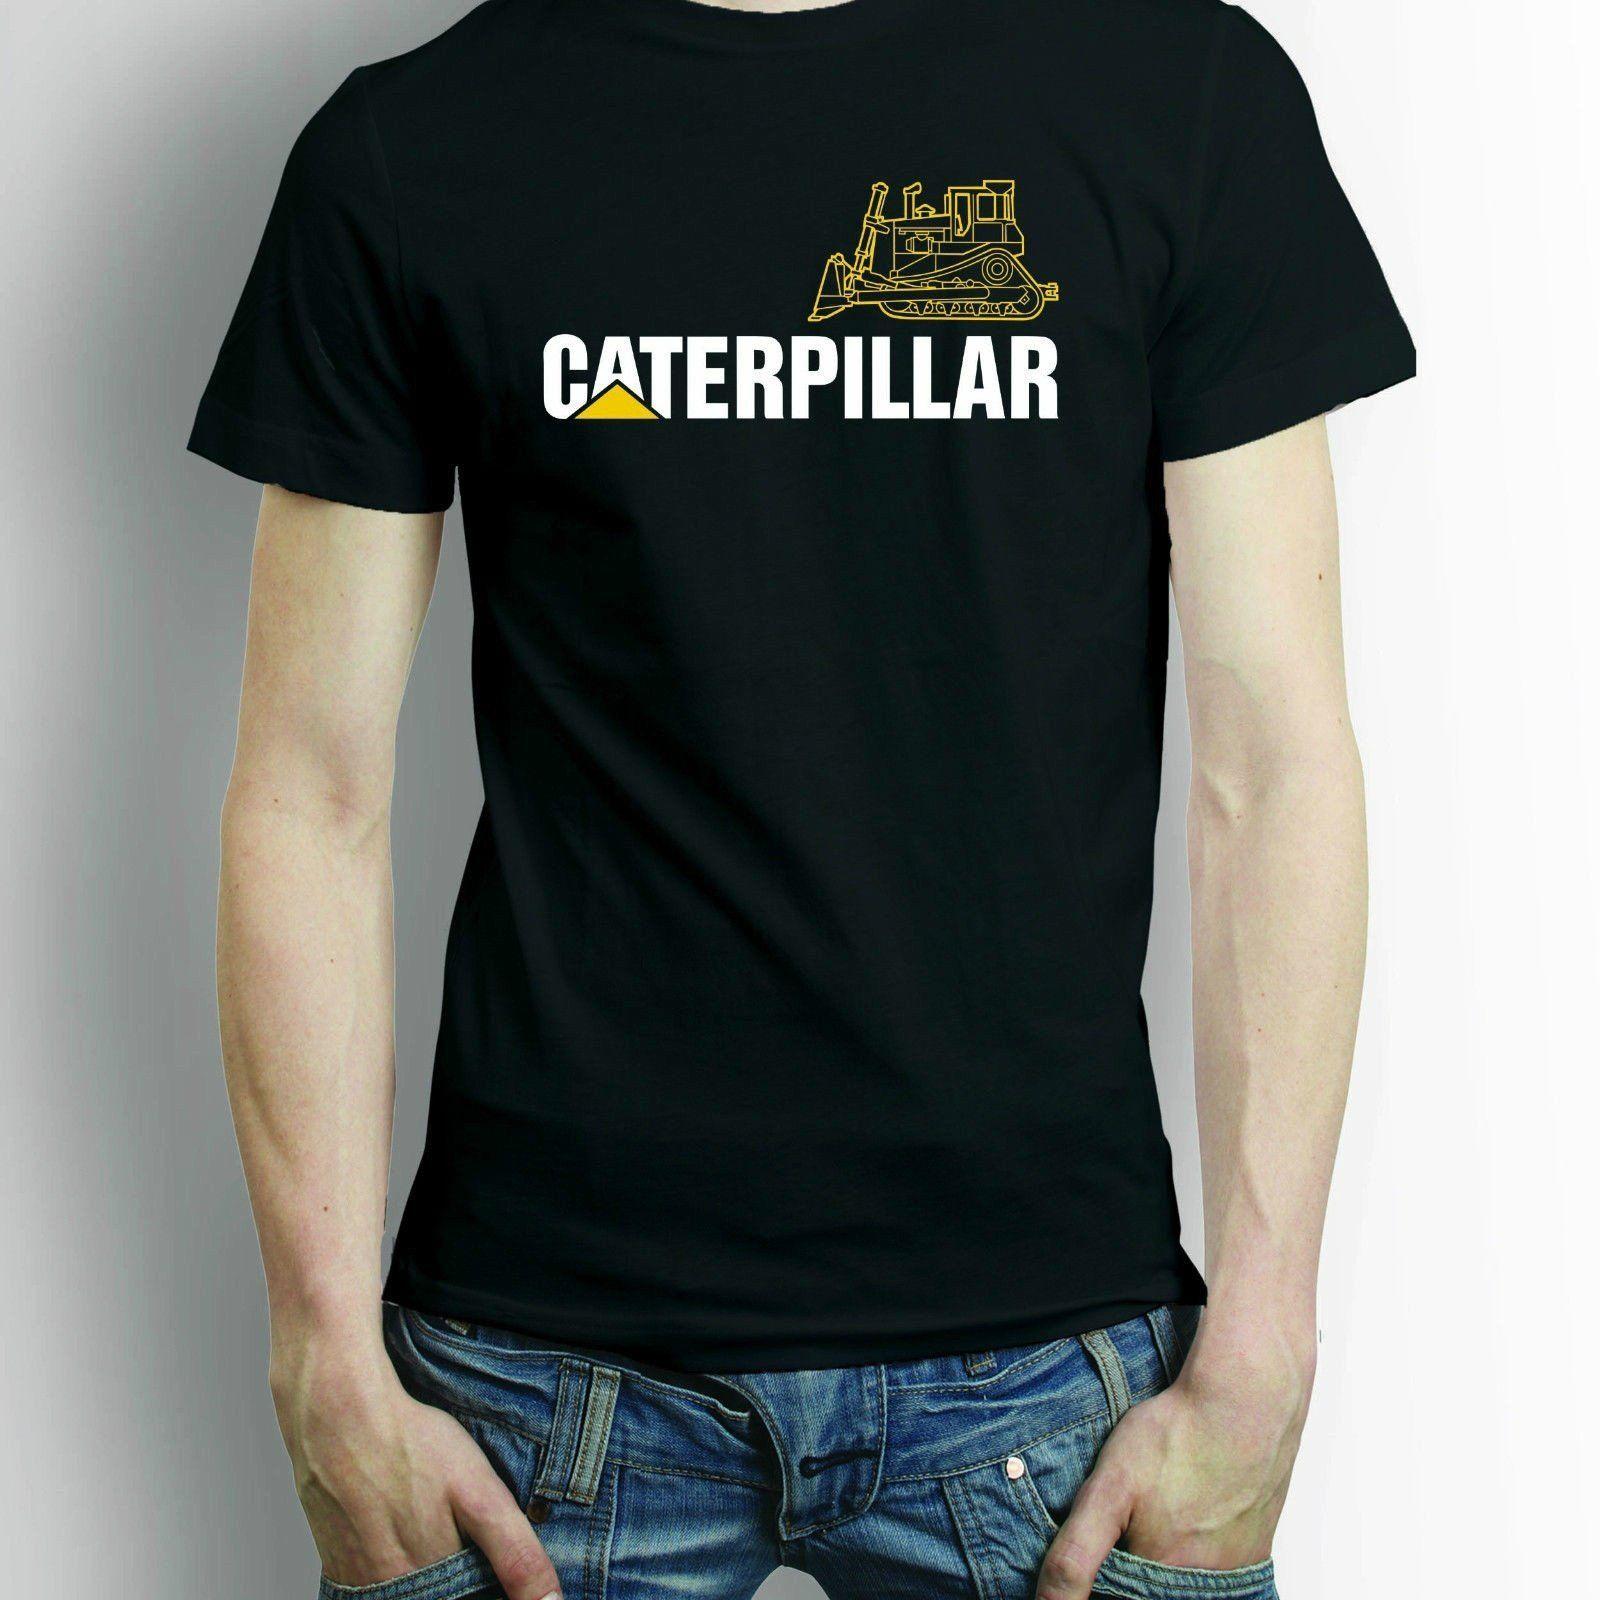 Black Caterpillar Logo - Man New Cat Caterpillar Logo Black Cotton T Shirt Tops